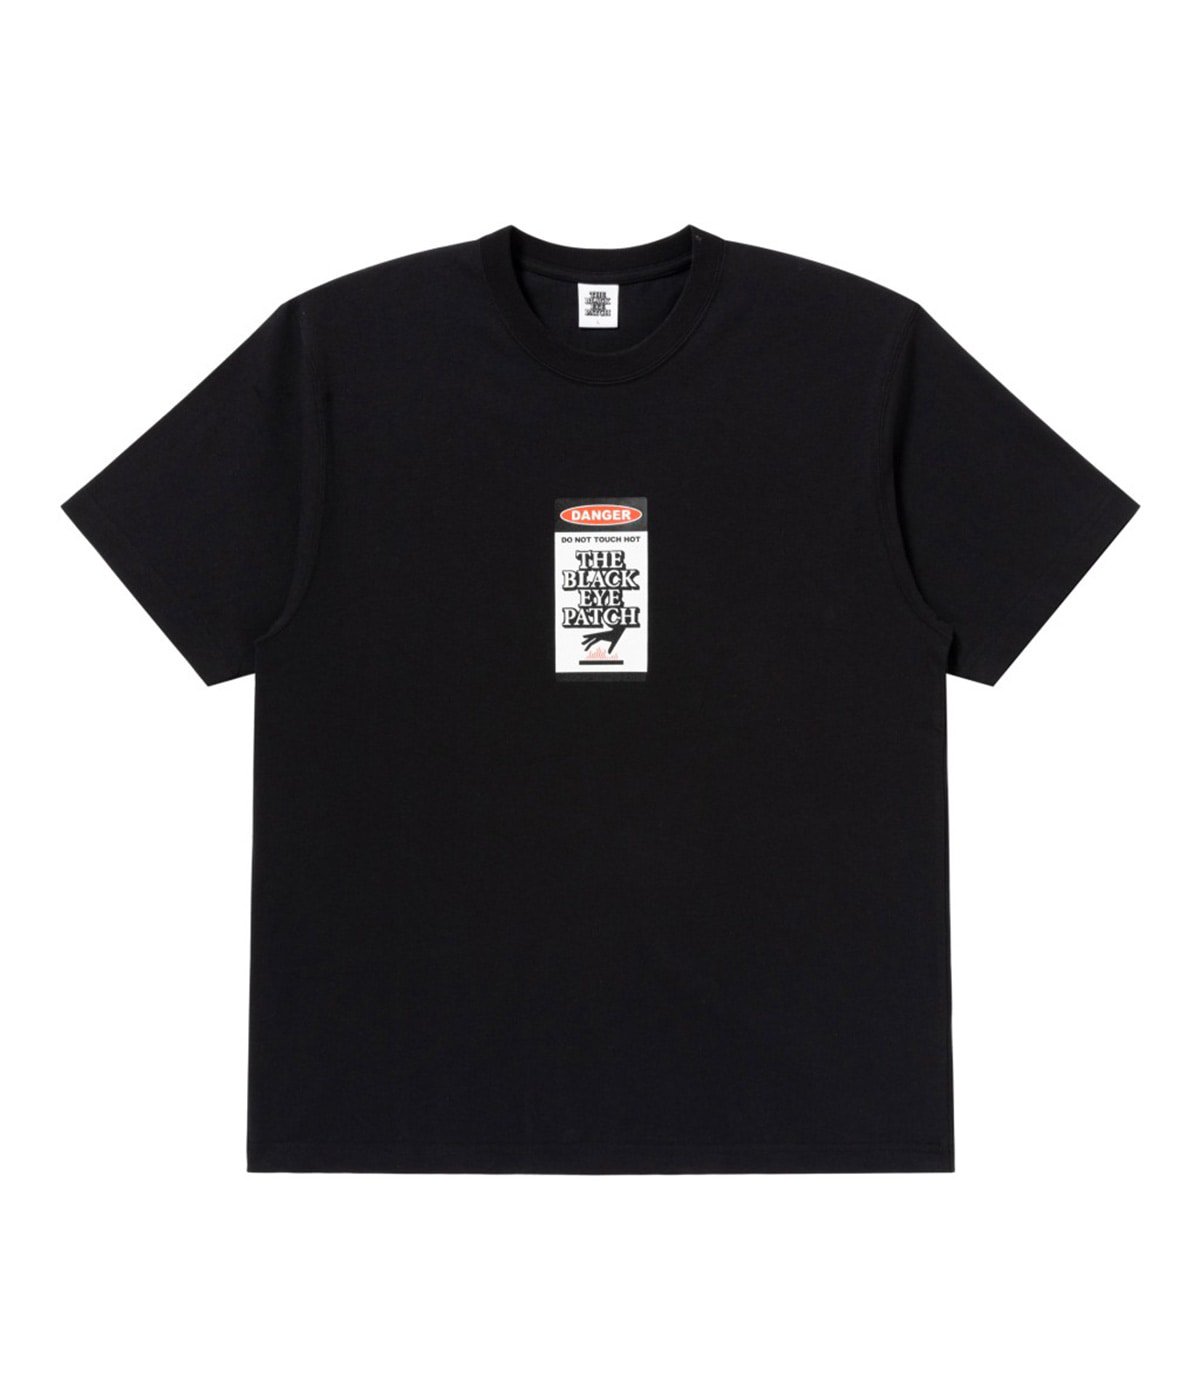 【BLACK EYE PATCH】Danger Label Tシャツ black